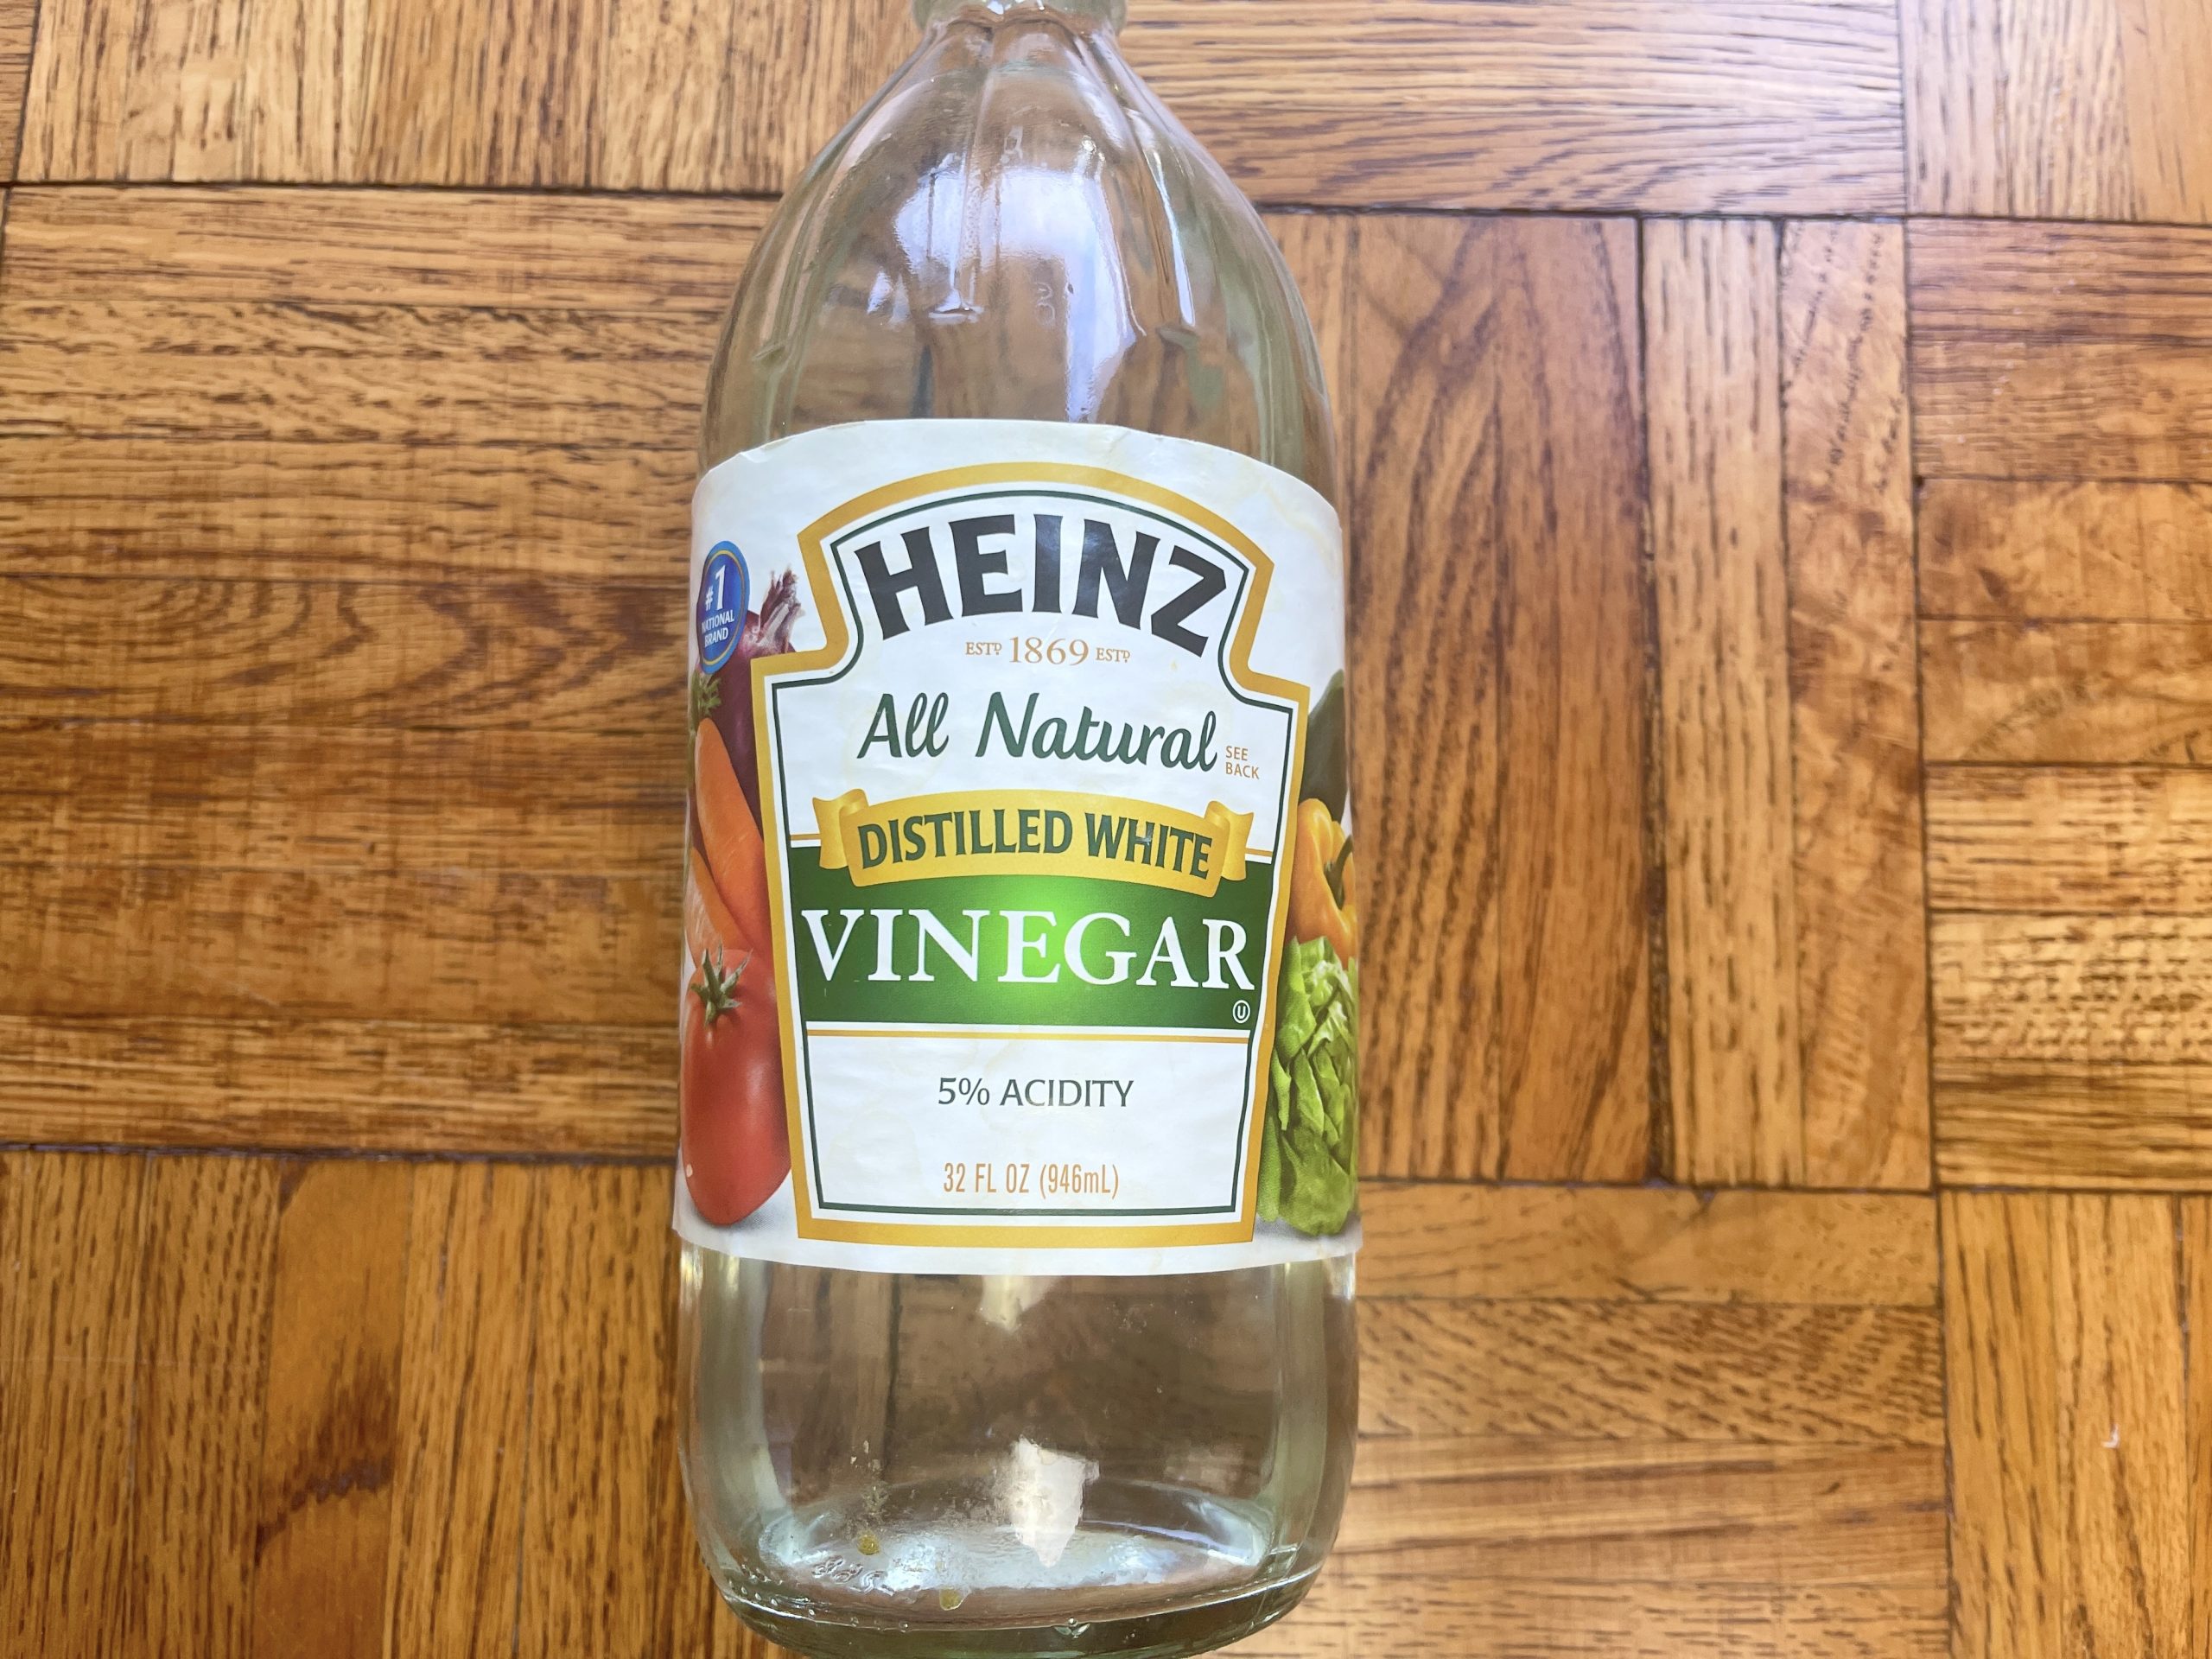 vinegar for the chicken